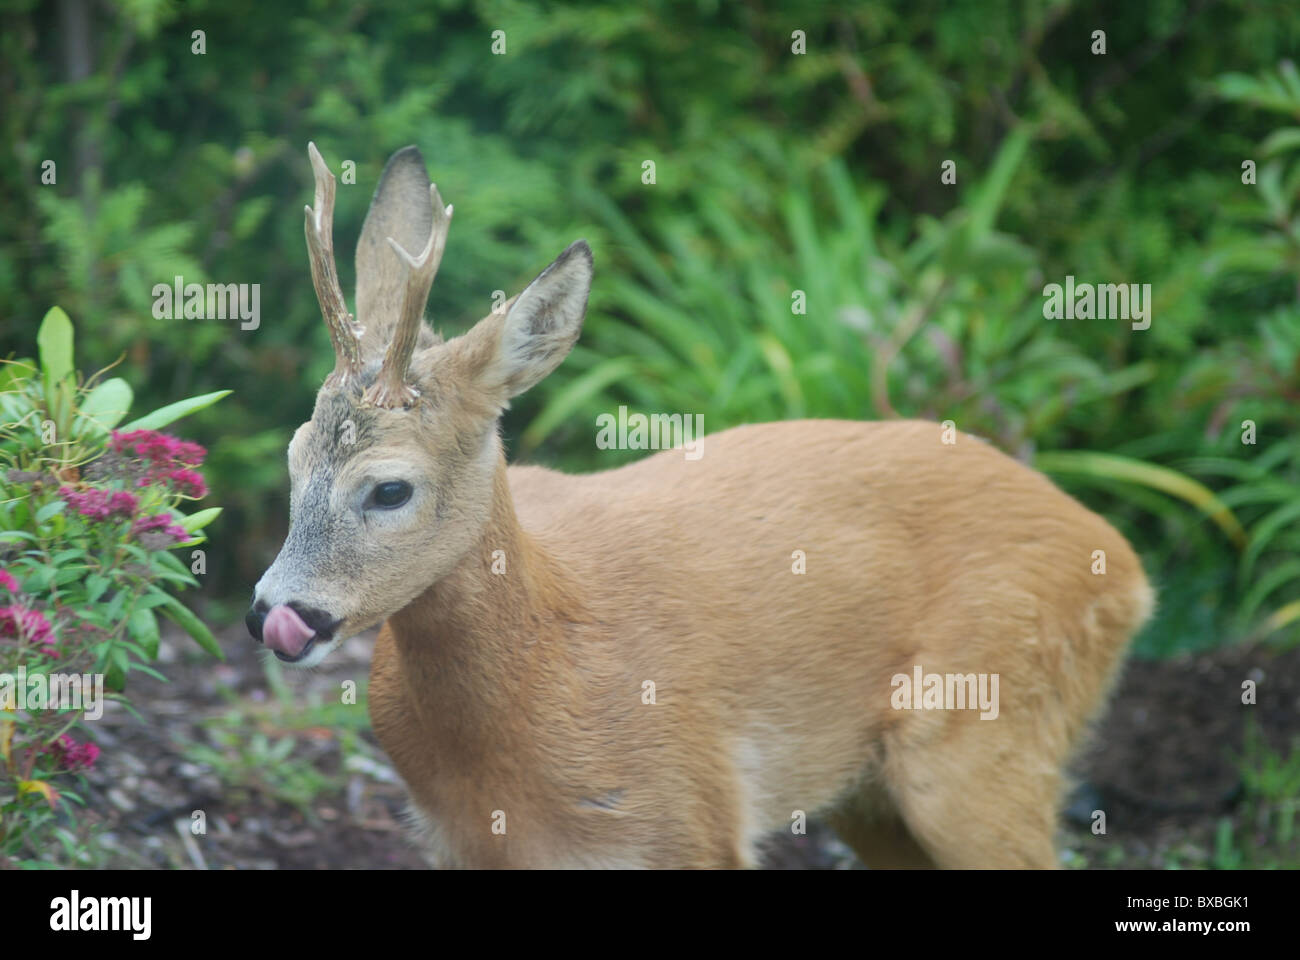 Male deer Stock Photo